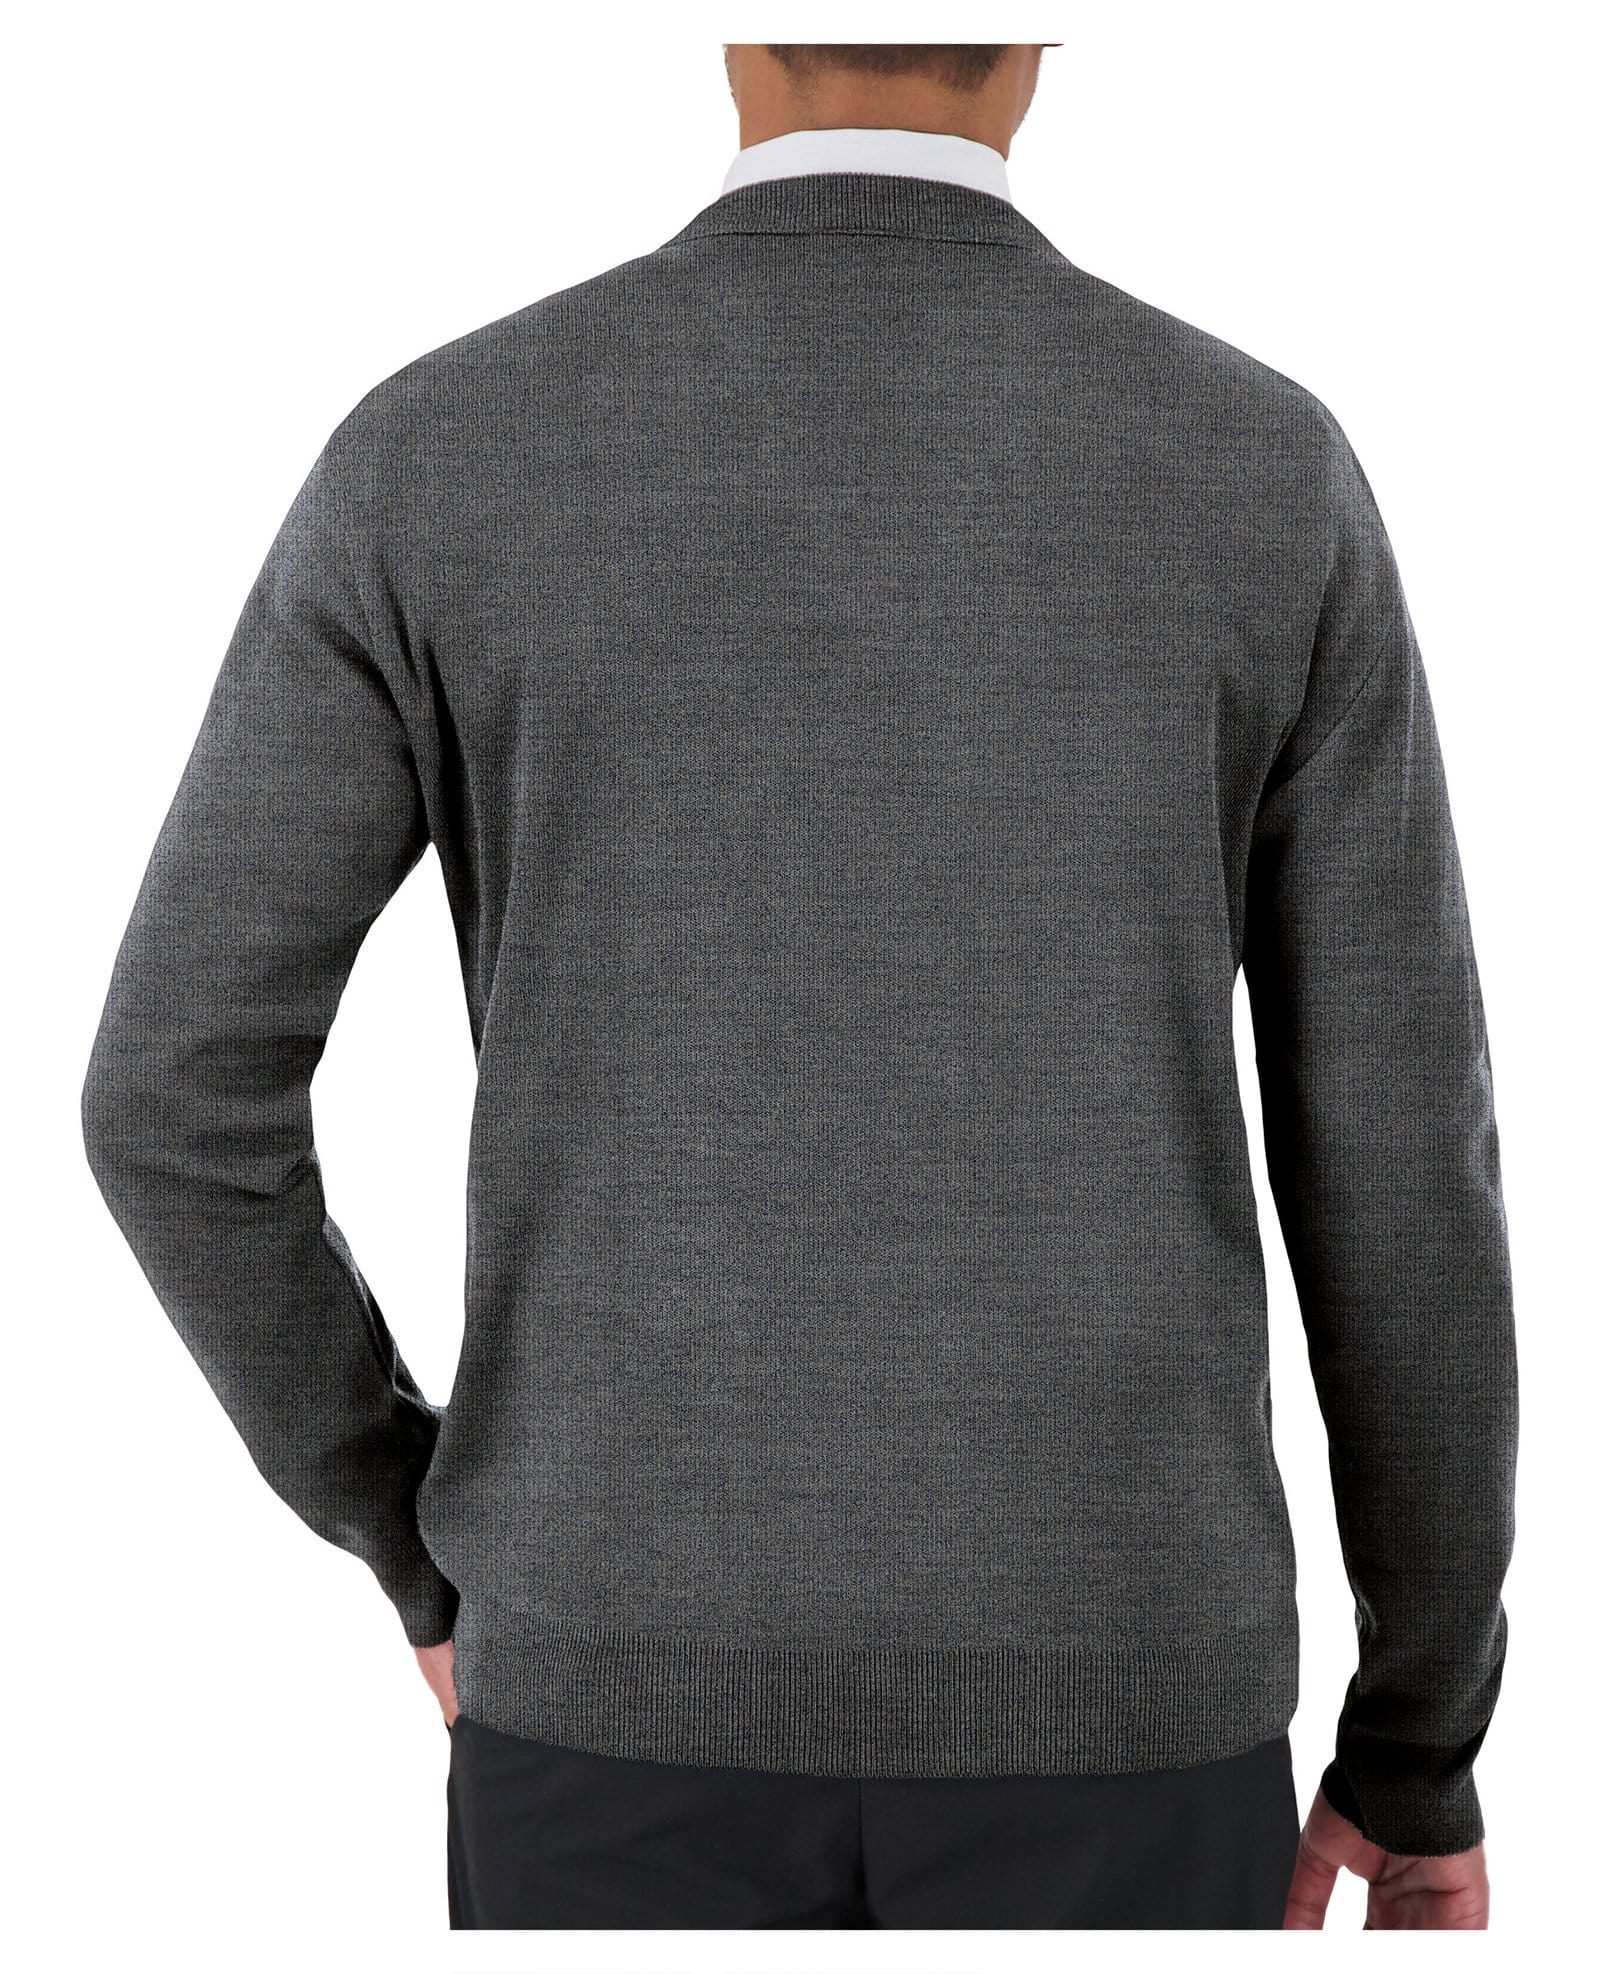 back of grey v-neck corporate sweater 